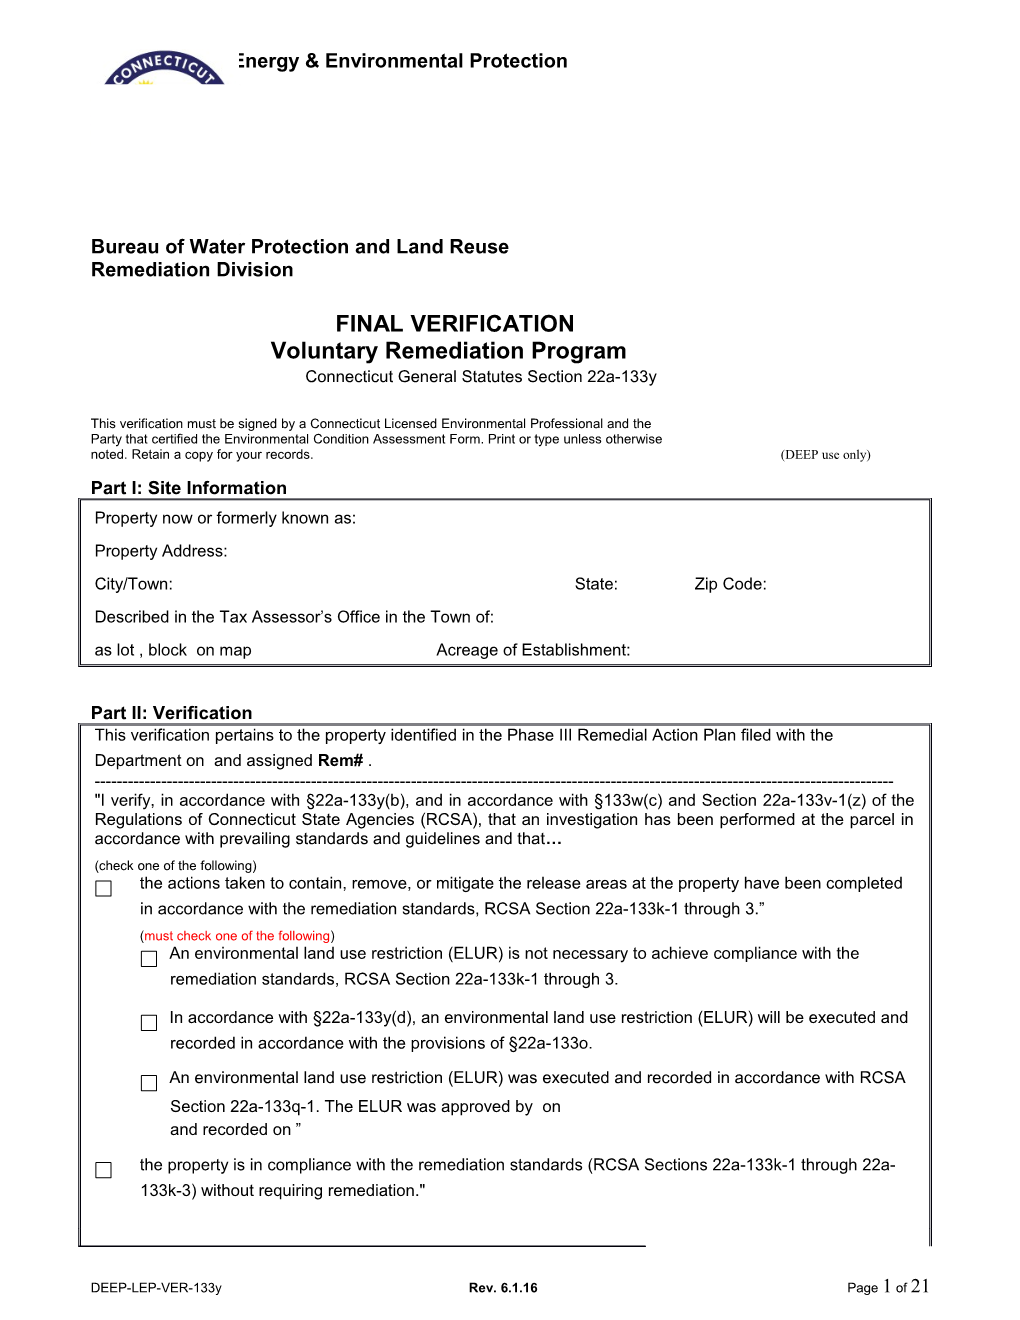 Voluntary Final 133Y Verification Form